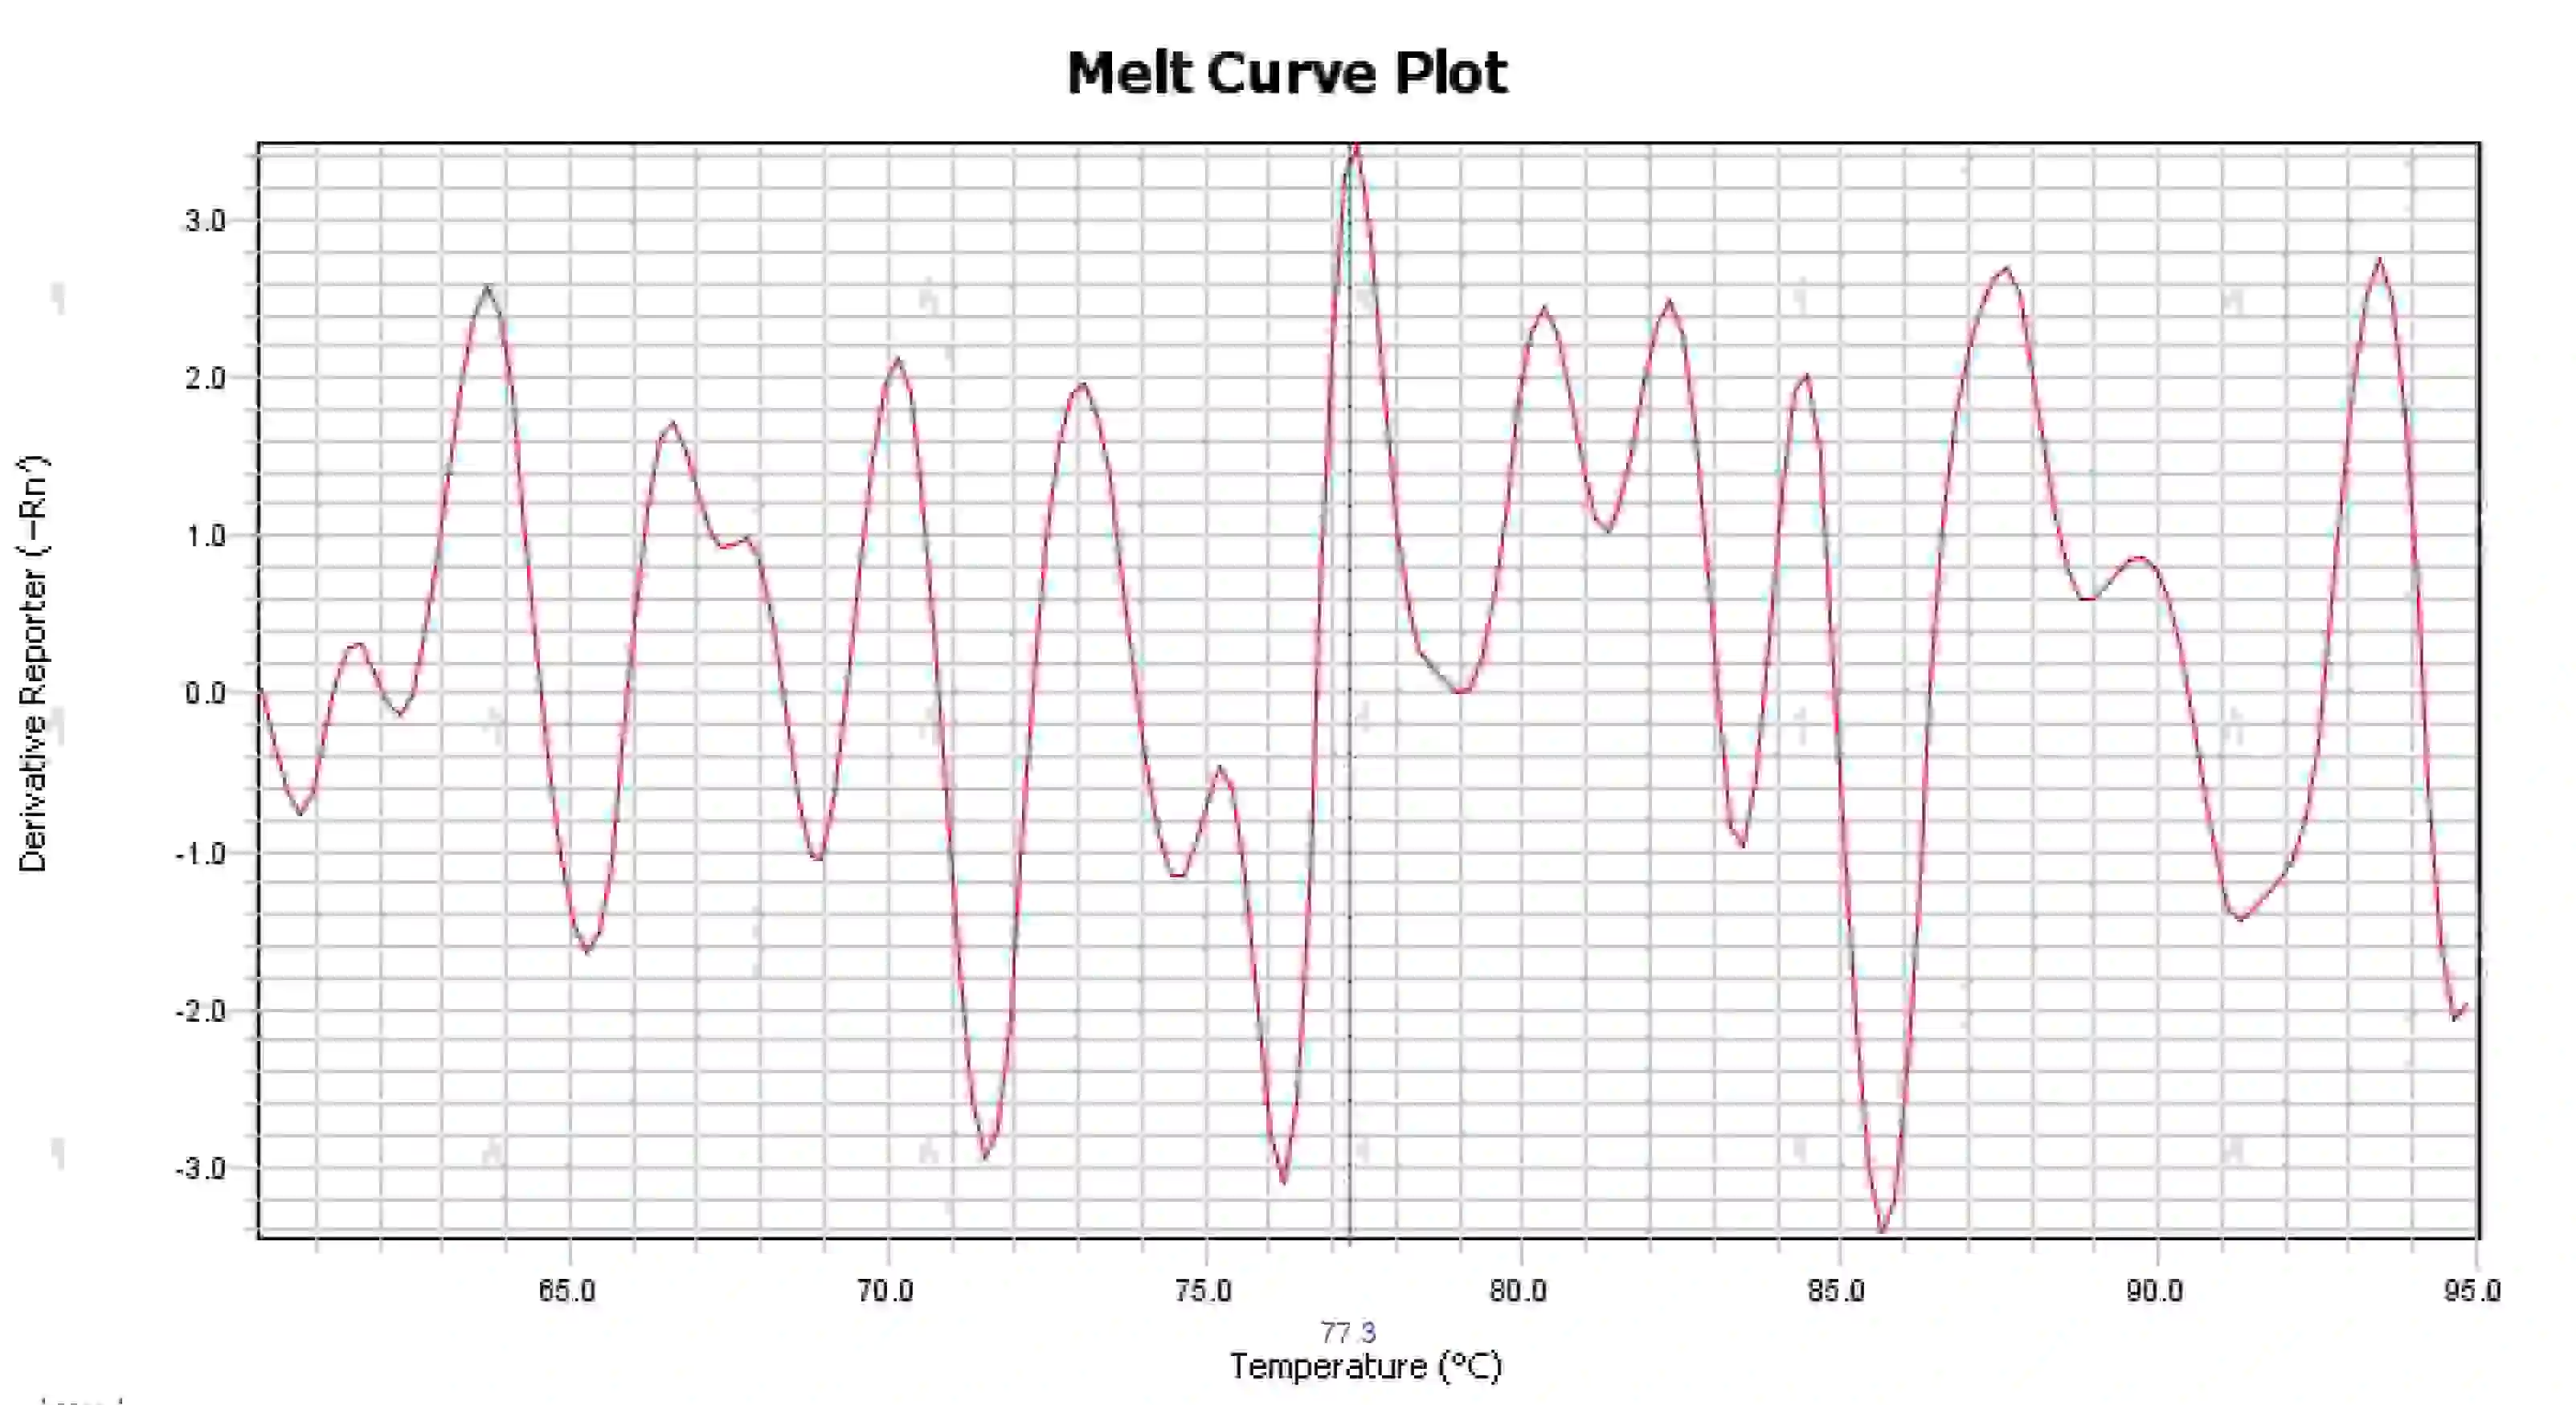 Figure 16. Melt Curve Plot